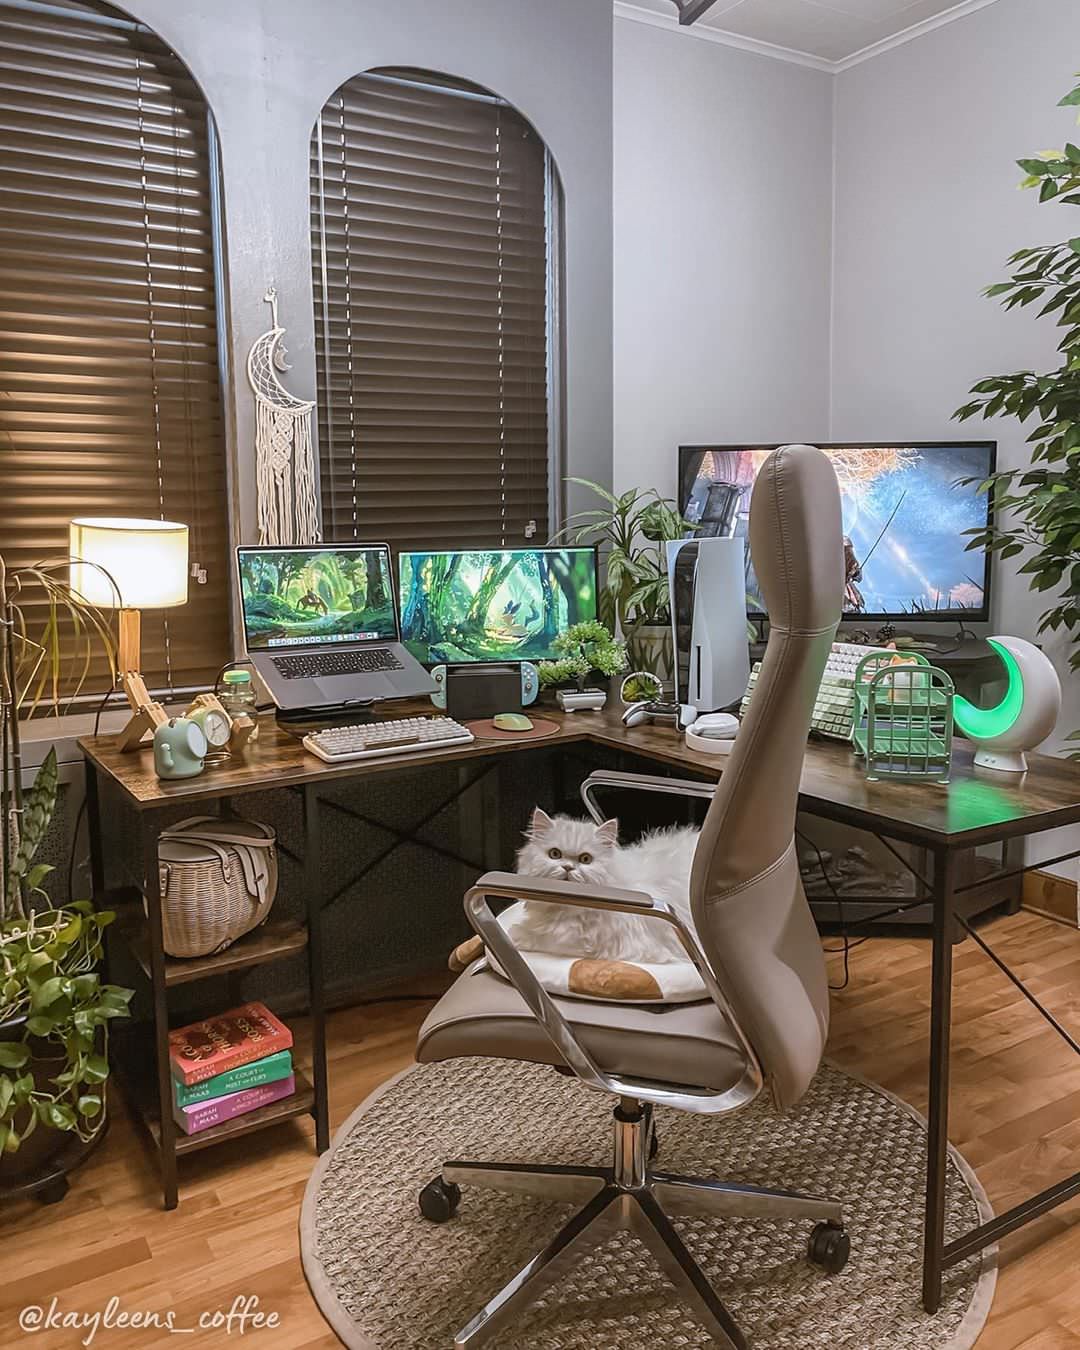 home computer room